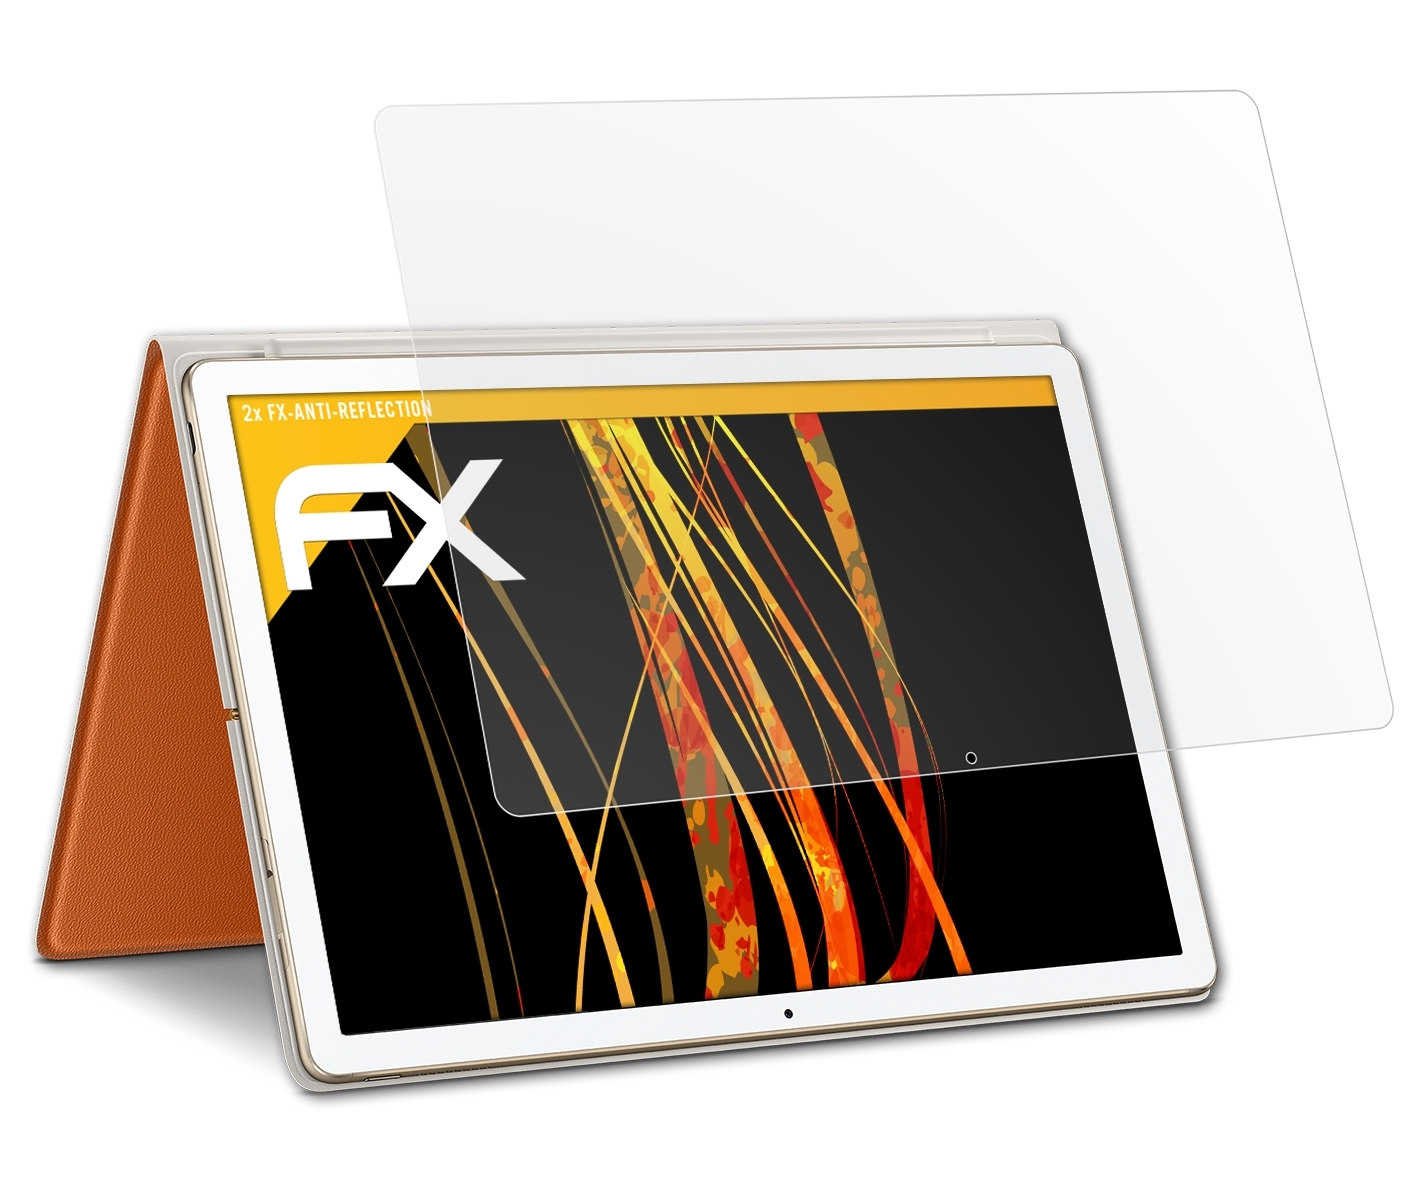 ATFOLIX 2x FX-Antireflex Displayschutz(für Huawei MateBook E)